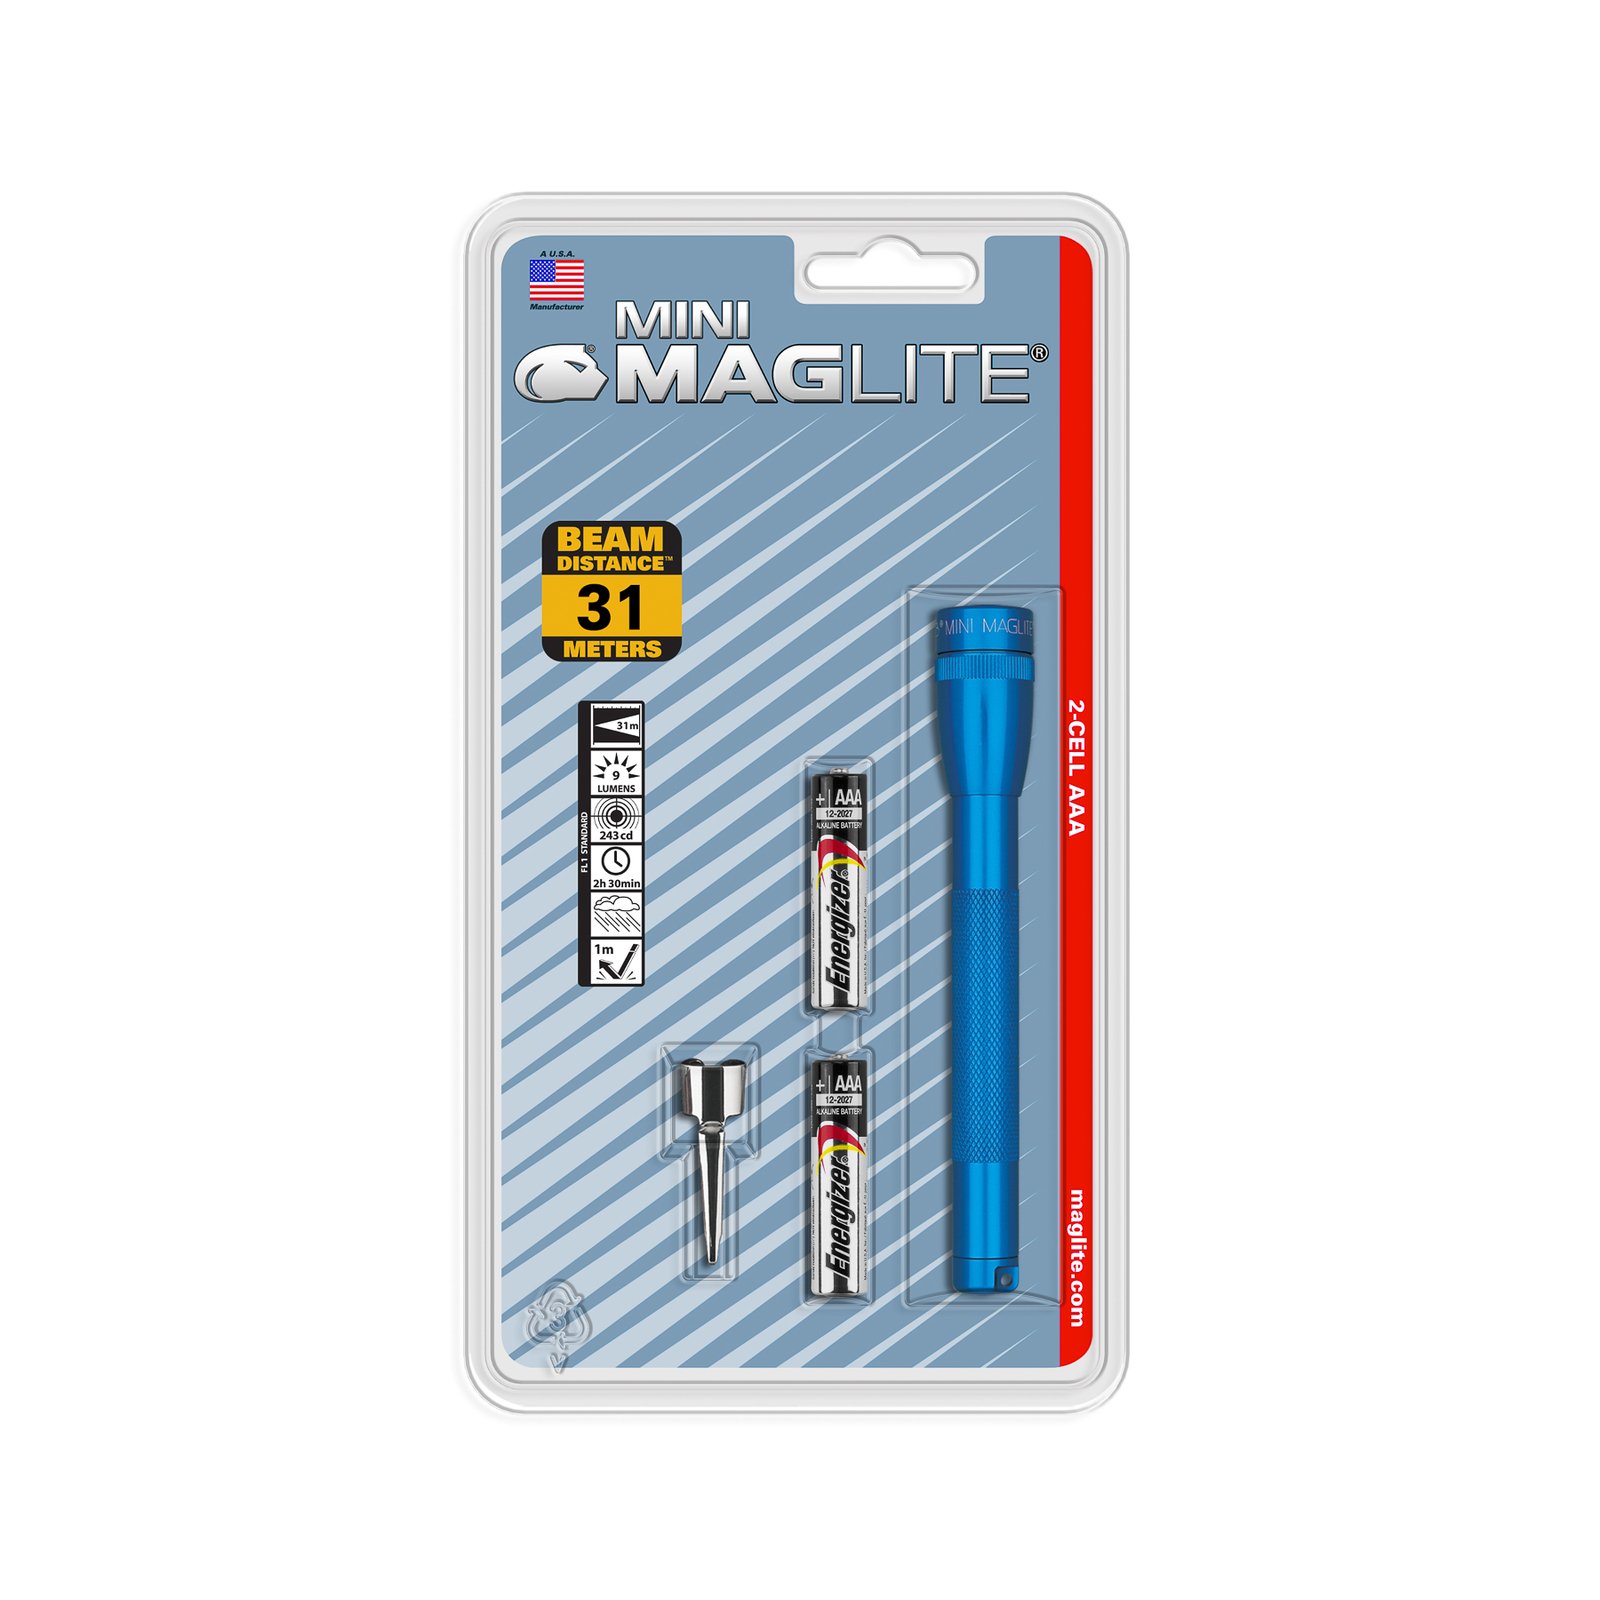 Maglite Xenon torch Mini, 2-Cell AAA, blue